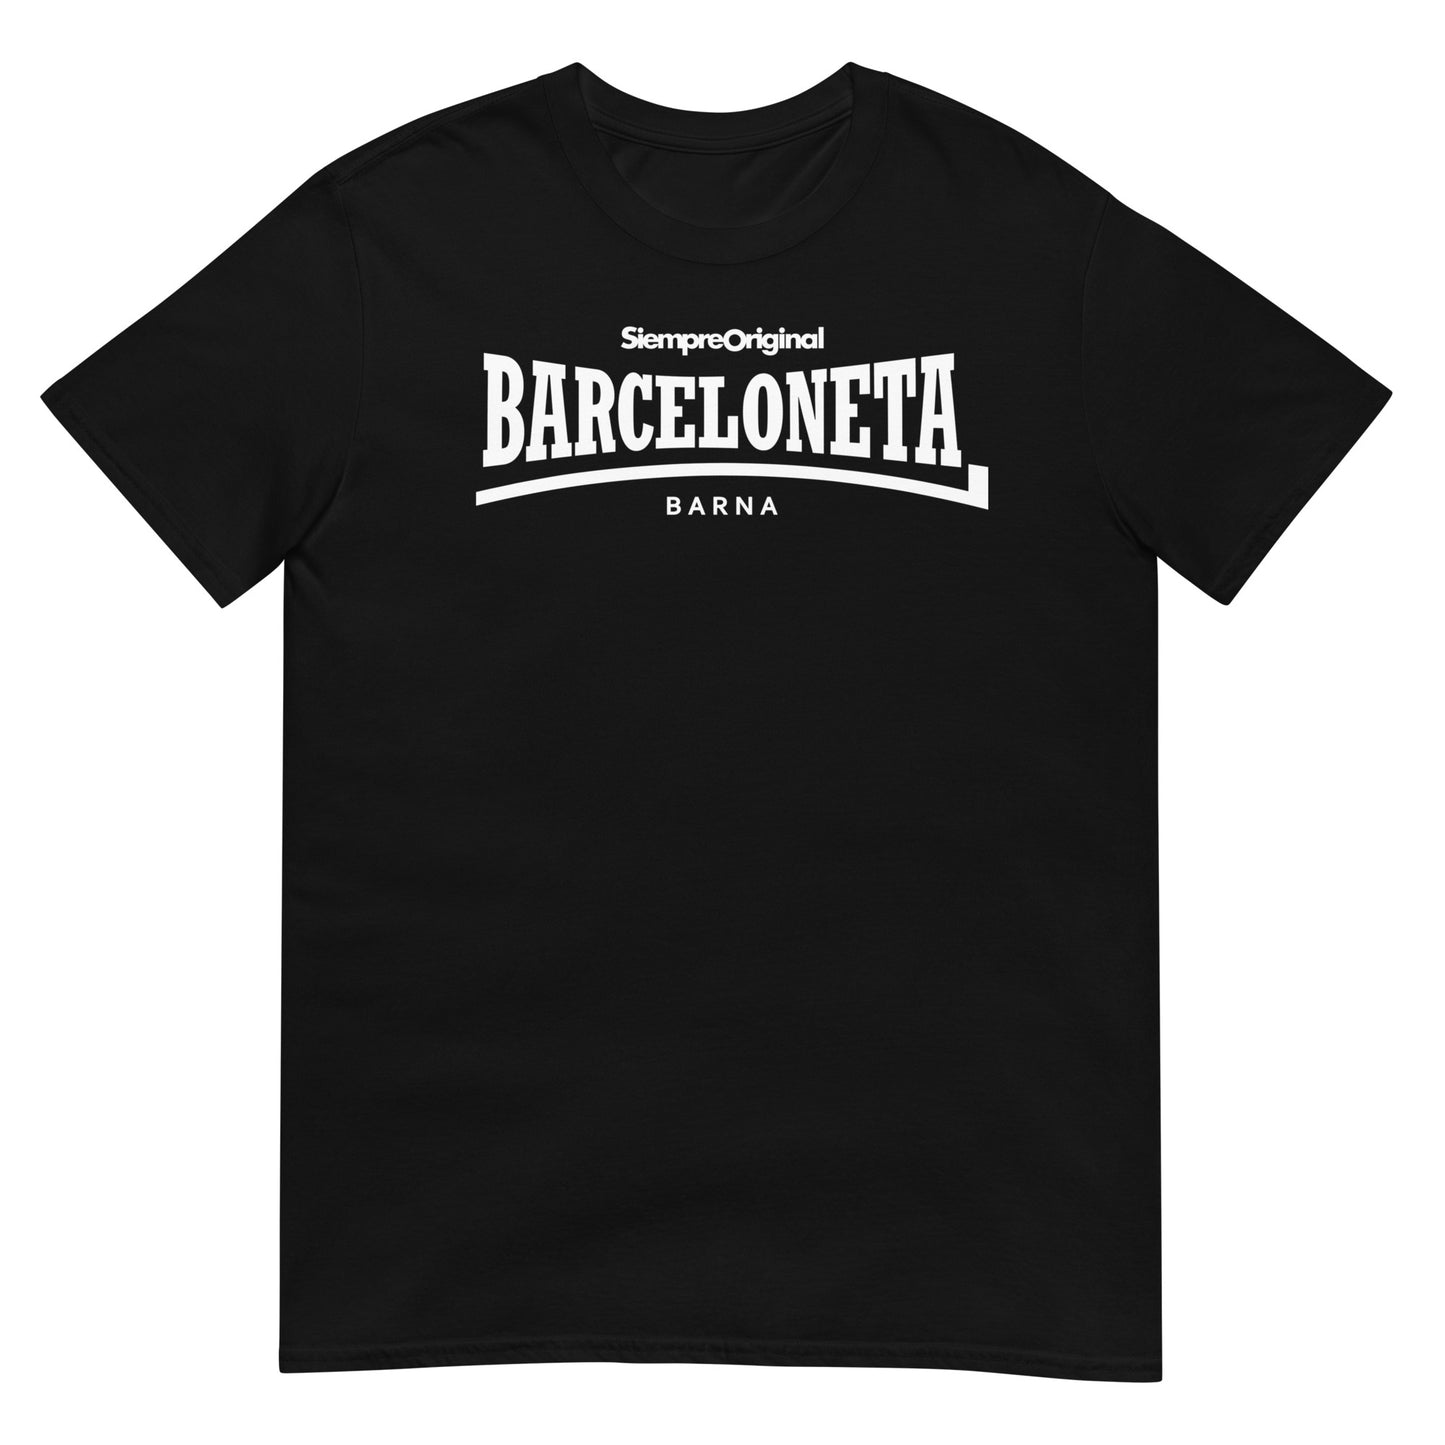 Camiseta del barrio de La Barceloneta - Barcelona. Color Negro.